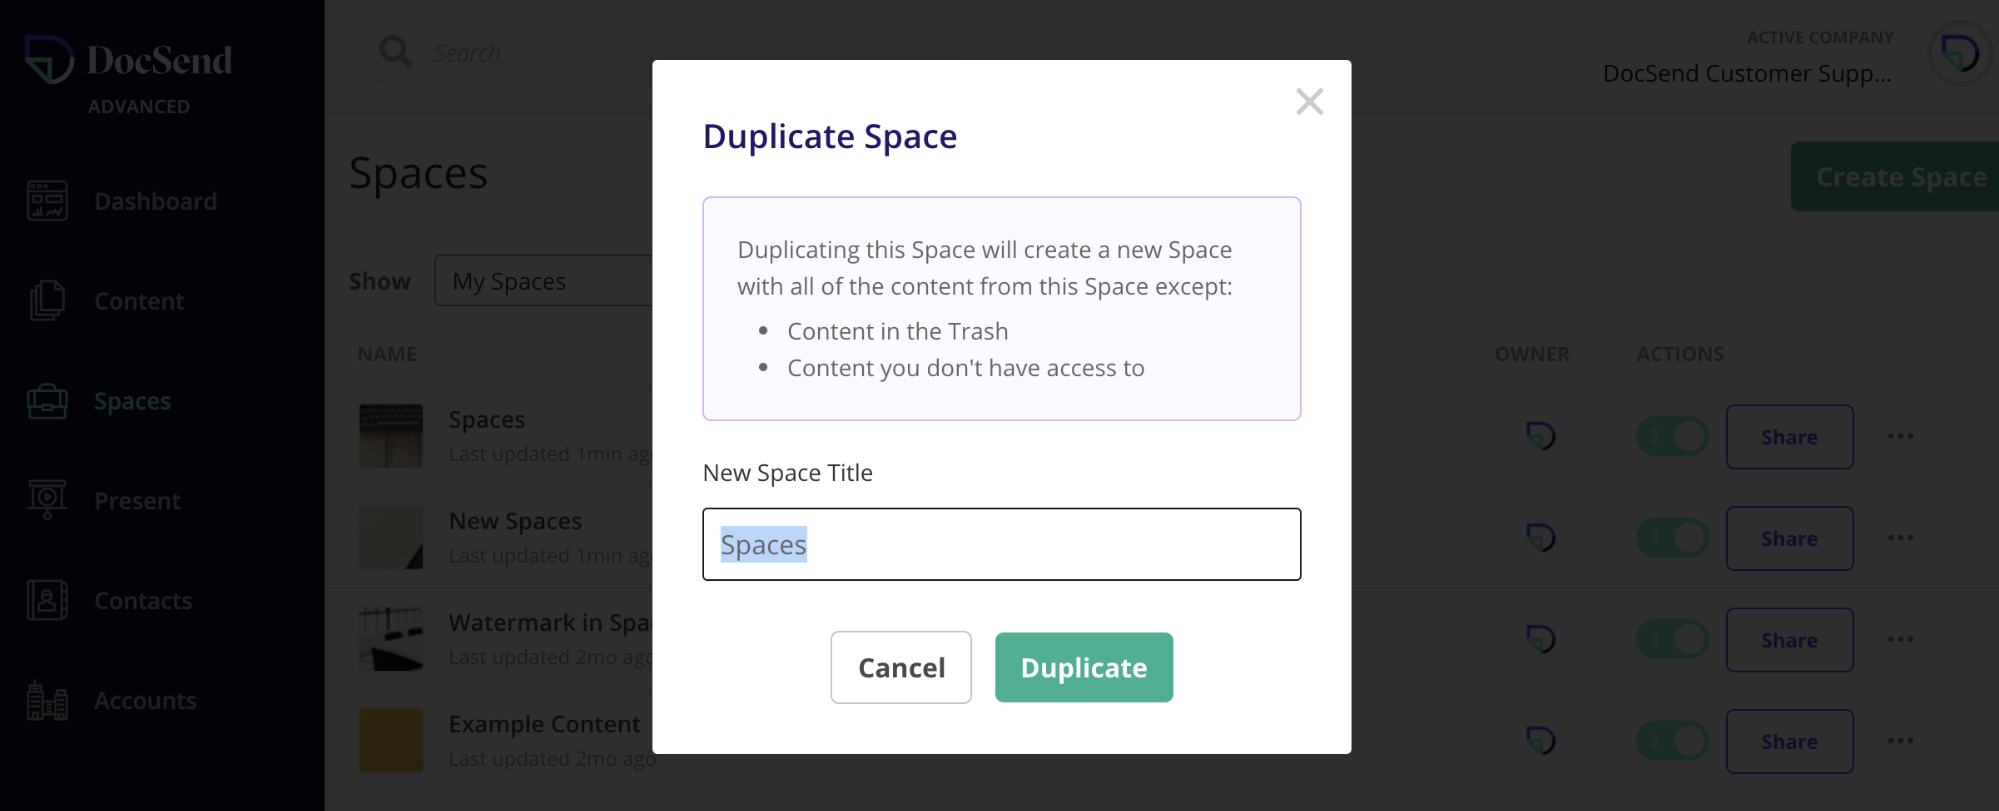 duplicate_space_2.png